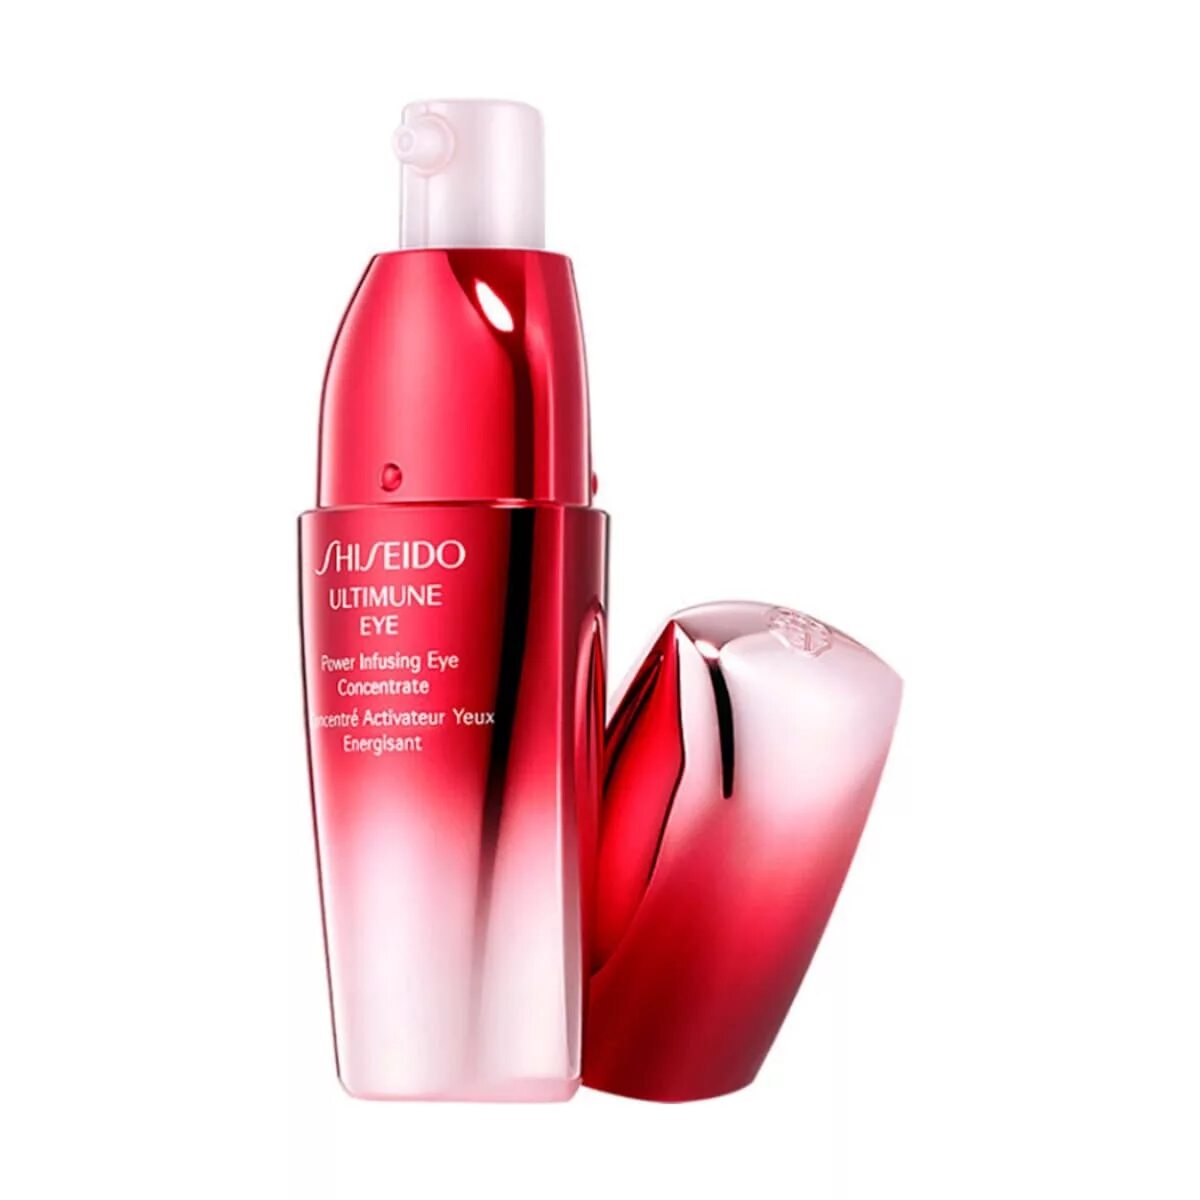 Shiseido сыворотка. Ультимьюн шисейдо. Shiseido Ultimune Eye Power infusing. Shiseido Ultimune концентрат. Shiseido Ultimate.